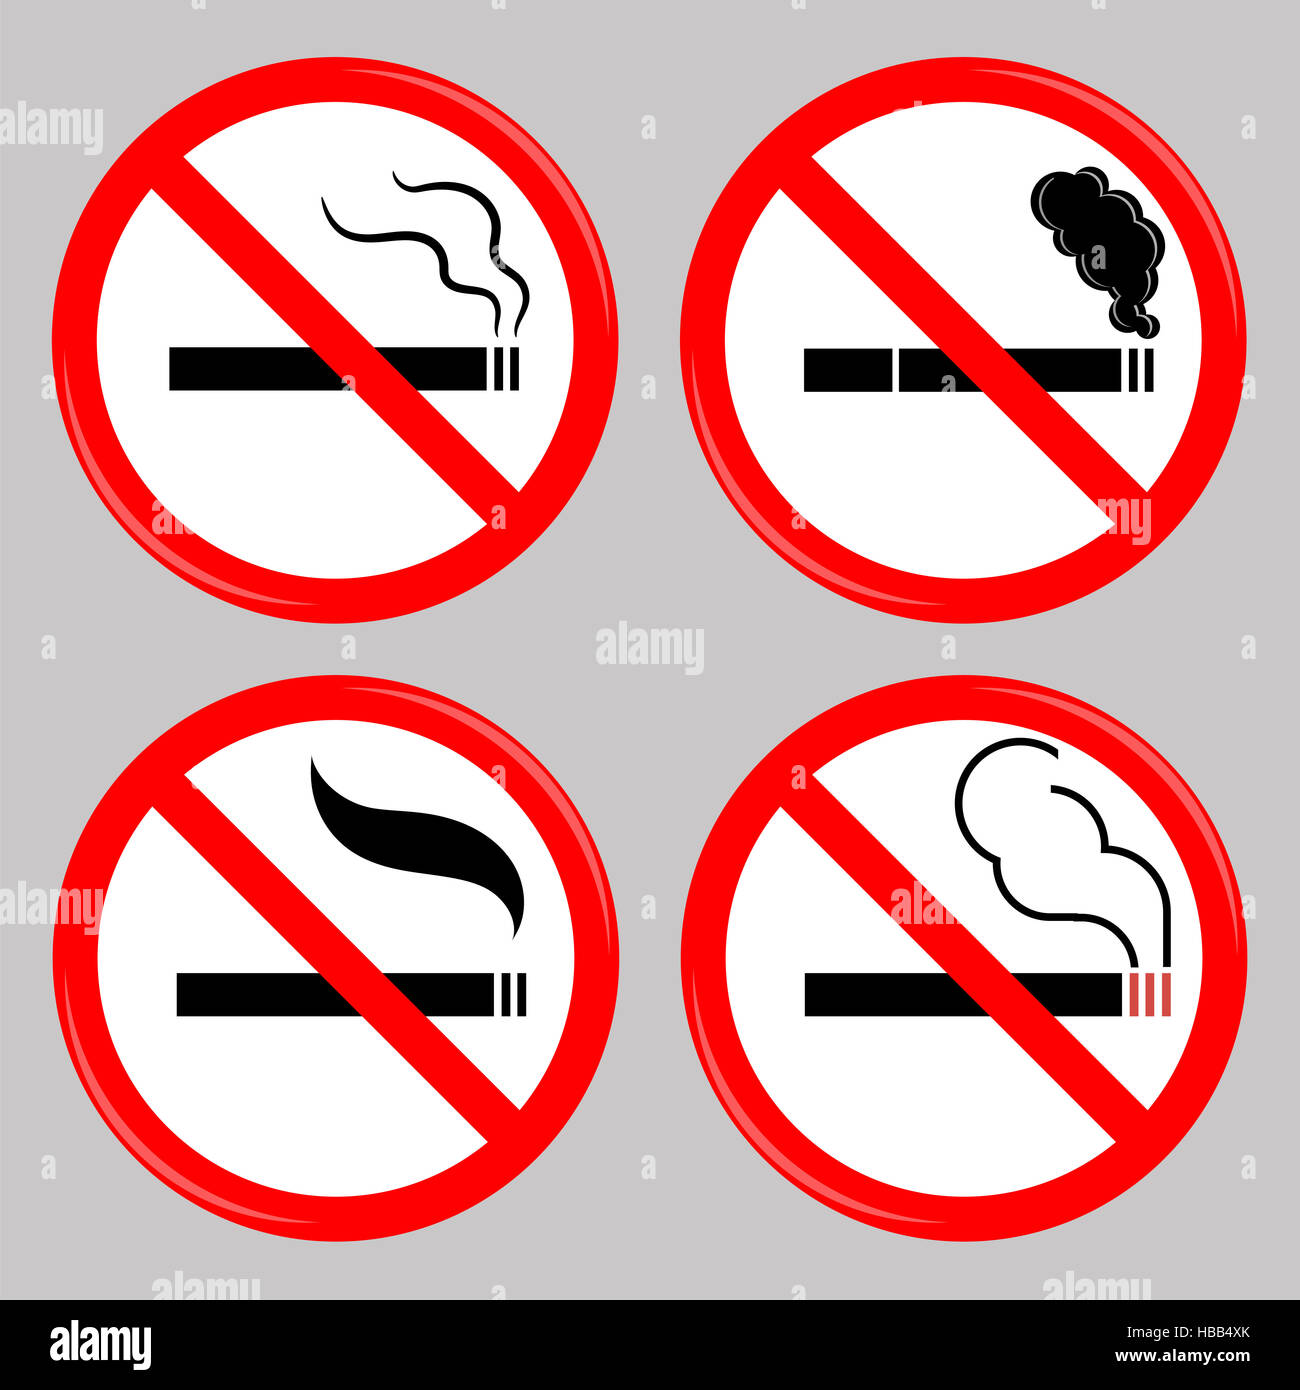 No Smoking, Cigarette Prohibited Symbols Stock Photo